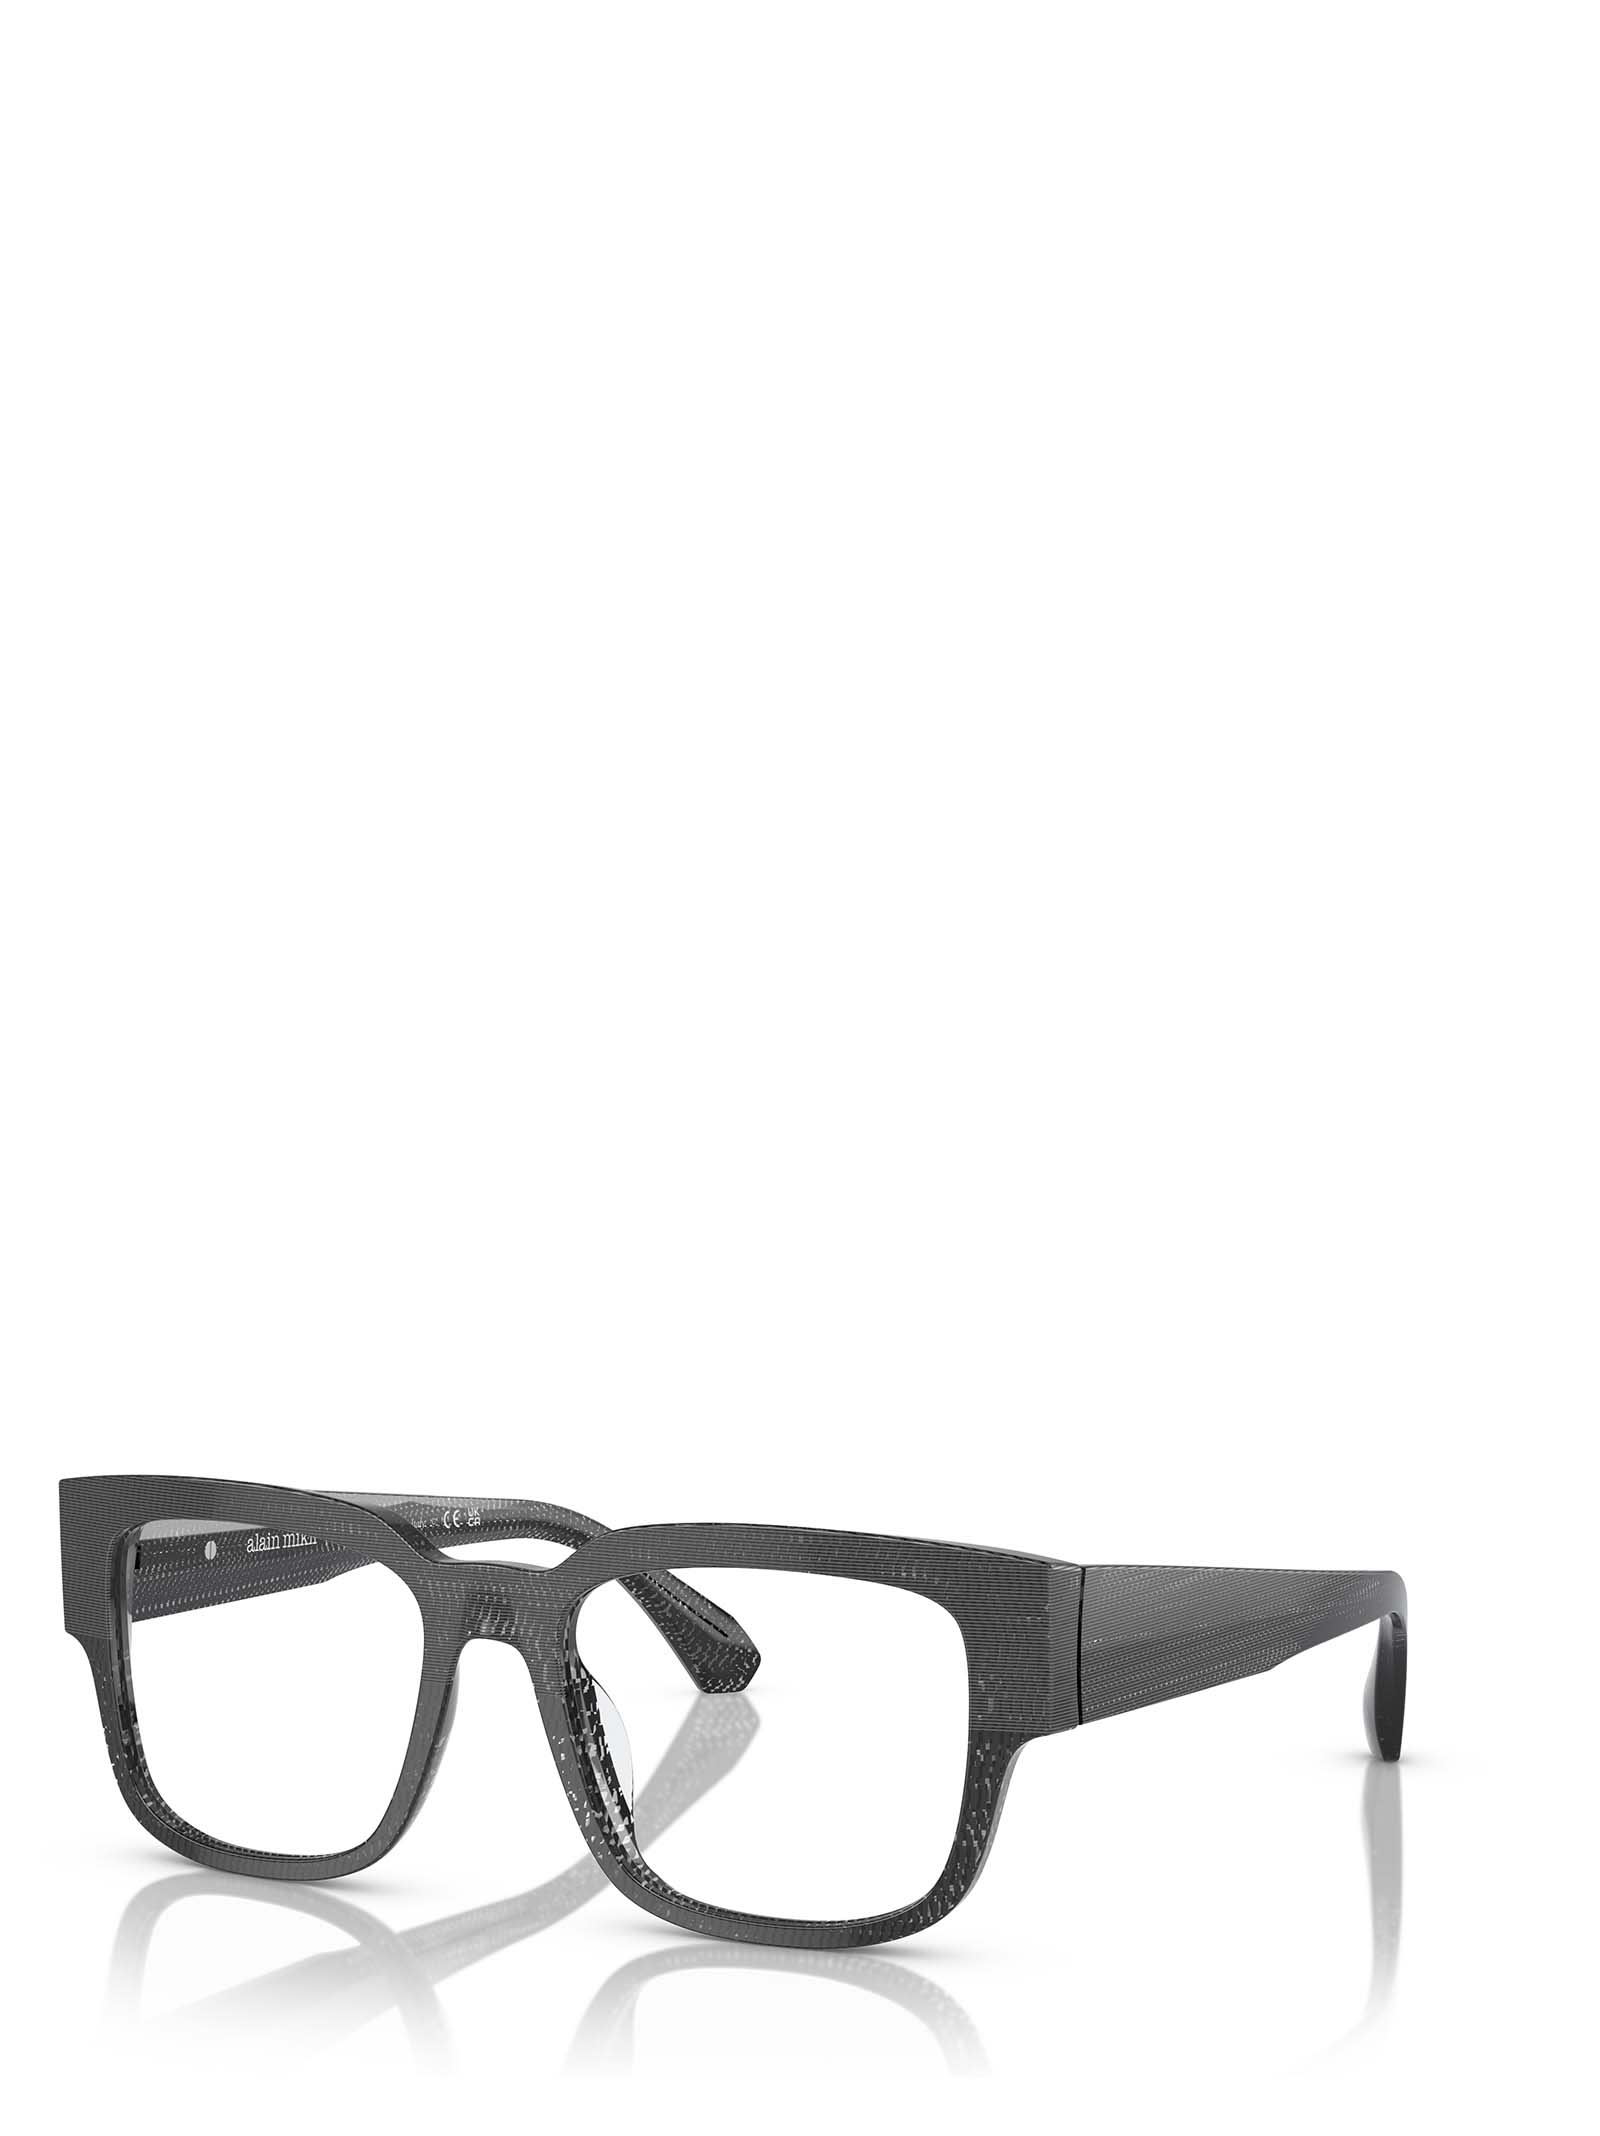 Shop Alain Mikli A03504 New Pointillee Black Glasses